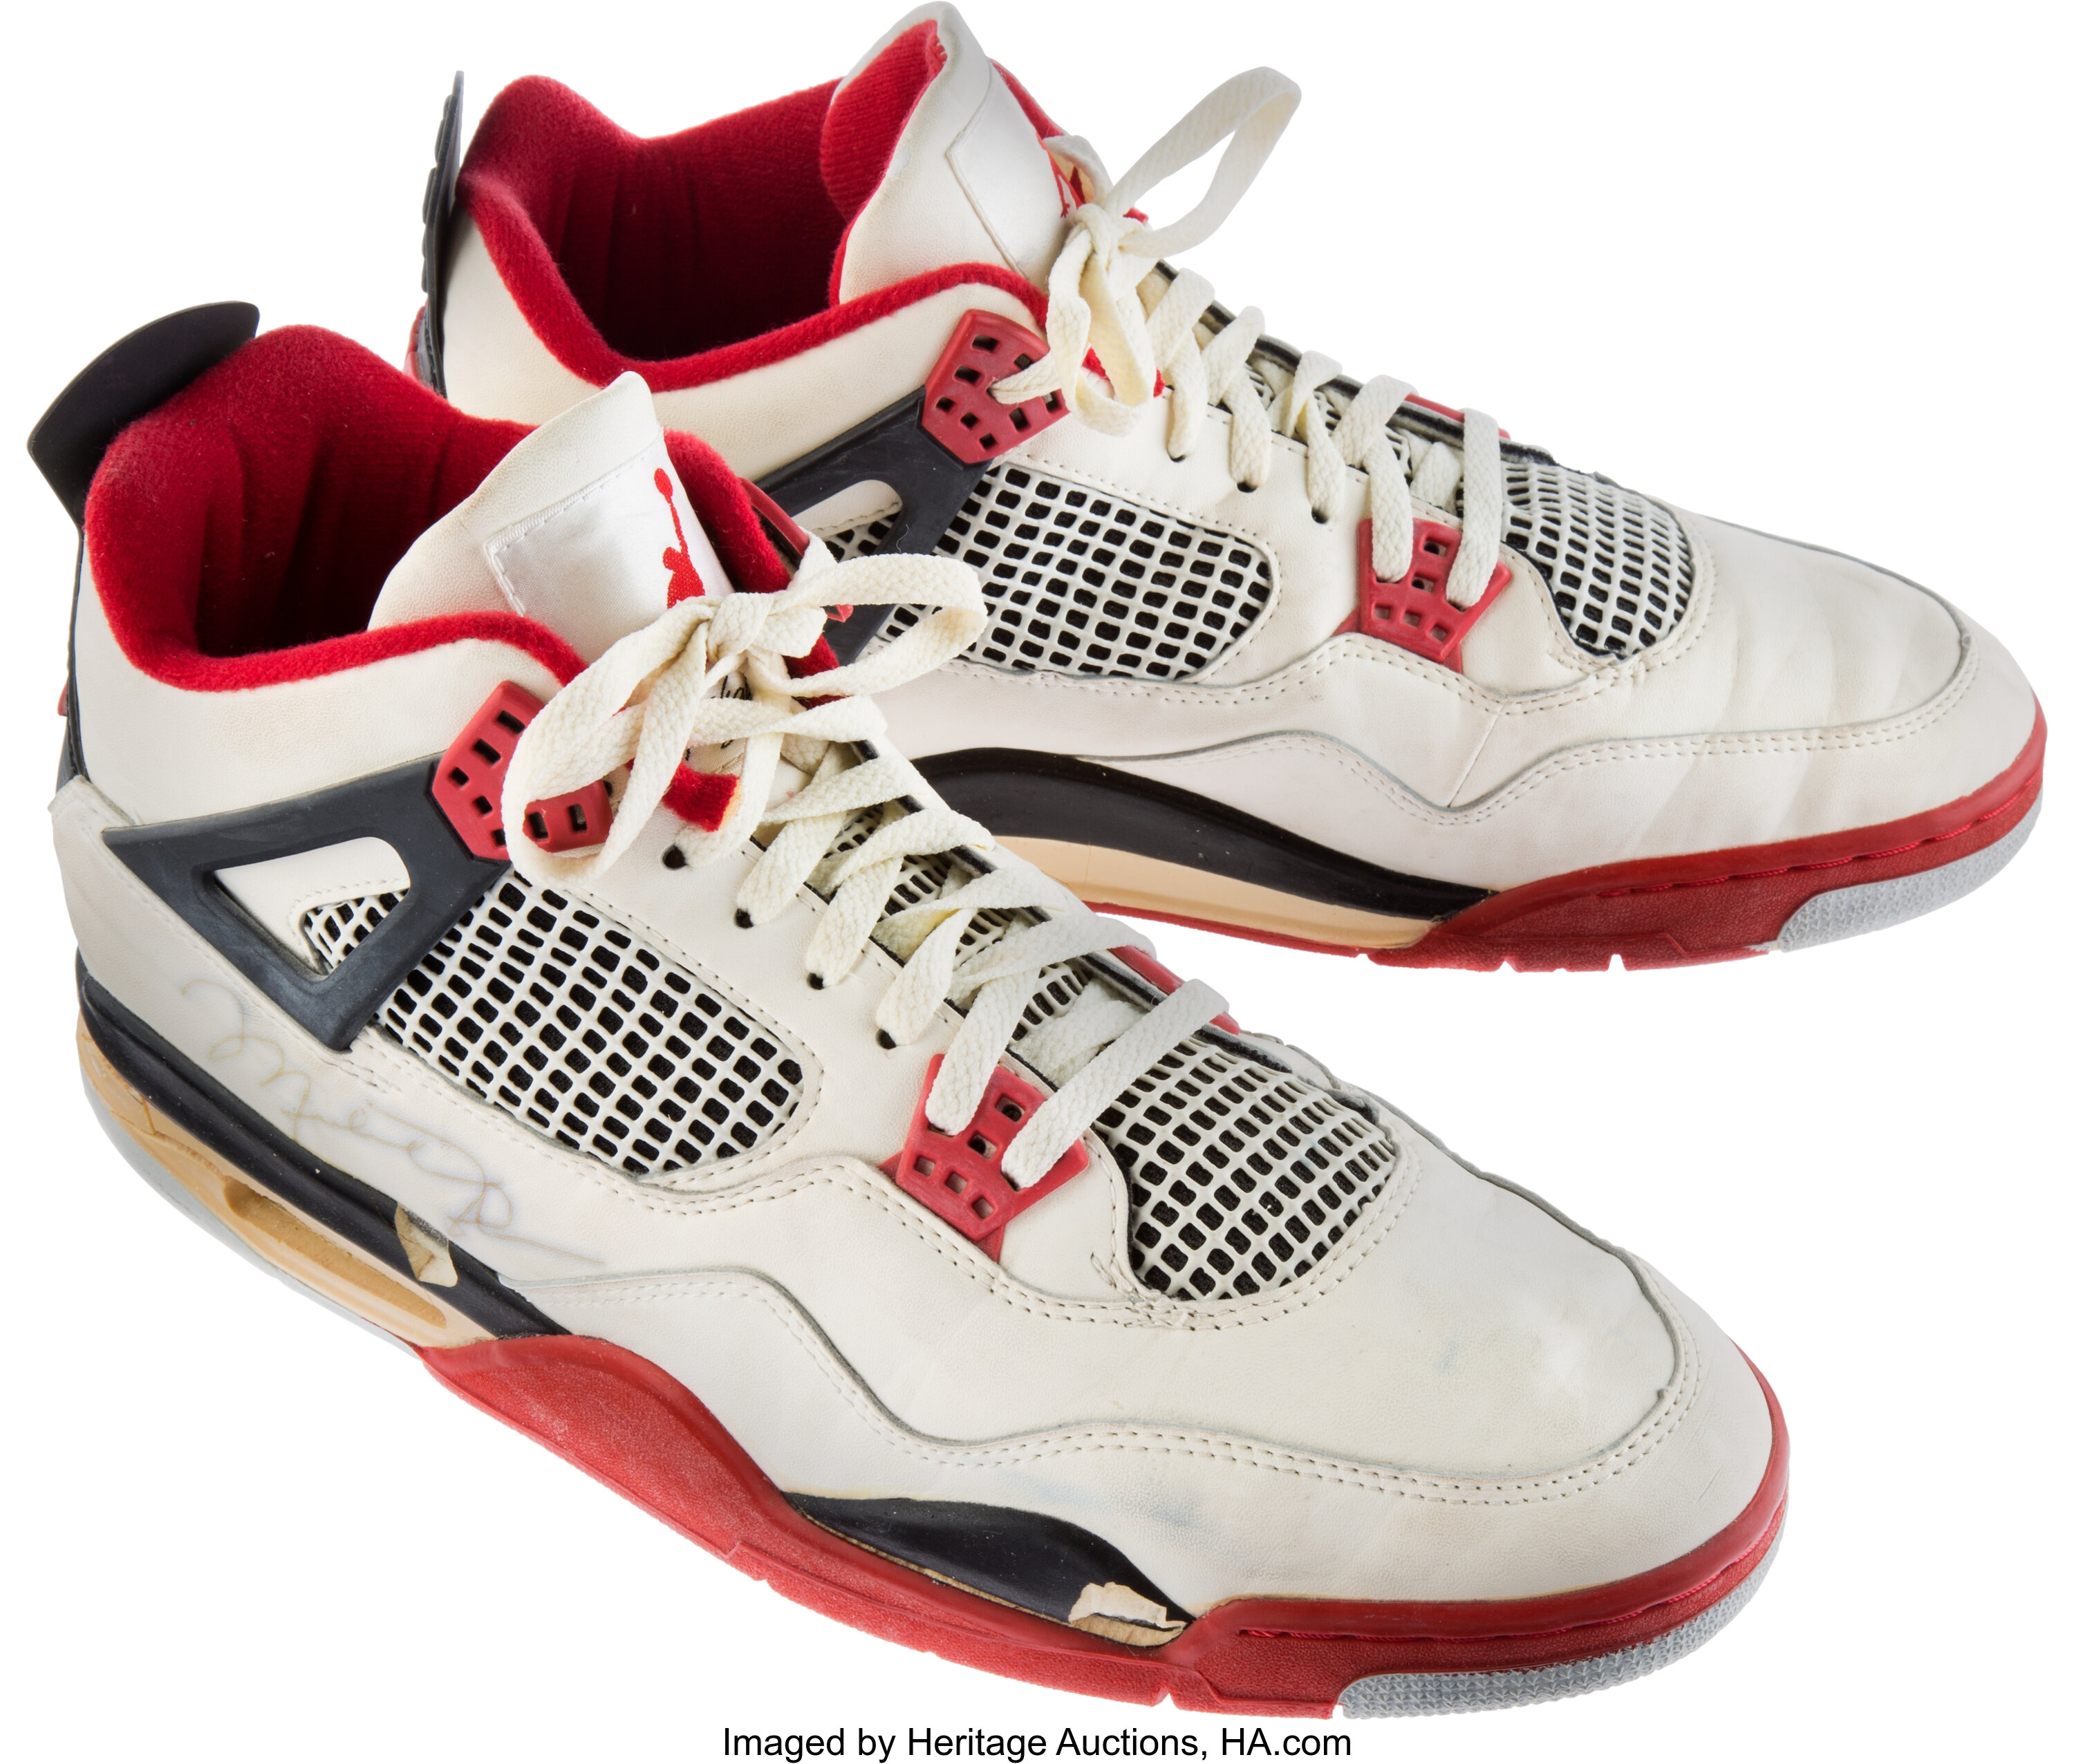 1988-89 Michael Jordan Game Worn, Signed Nike Air Jordan IV Shoes. | #82317 | Heritage Auctions